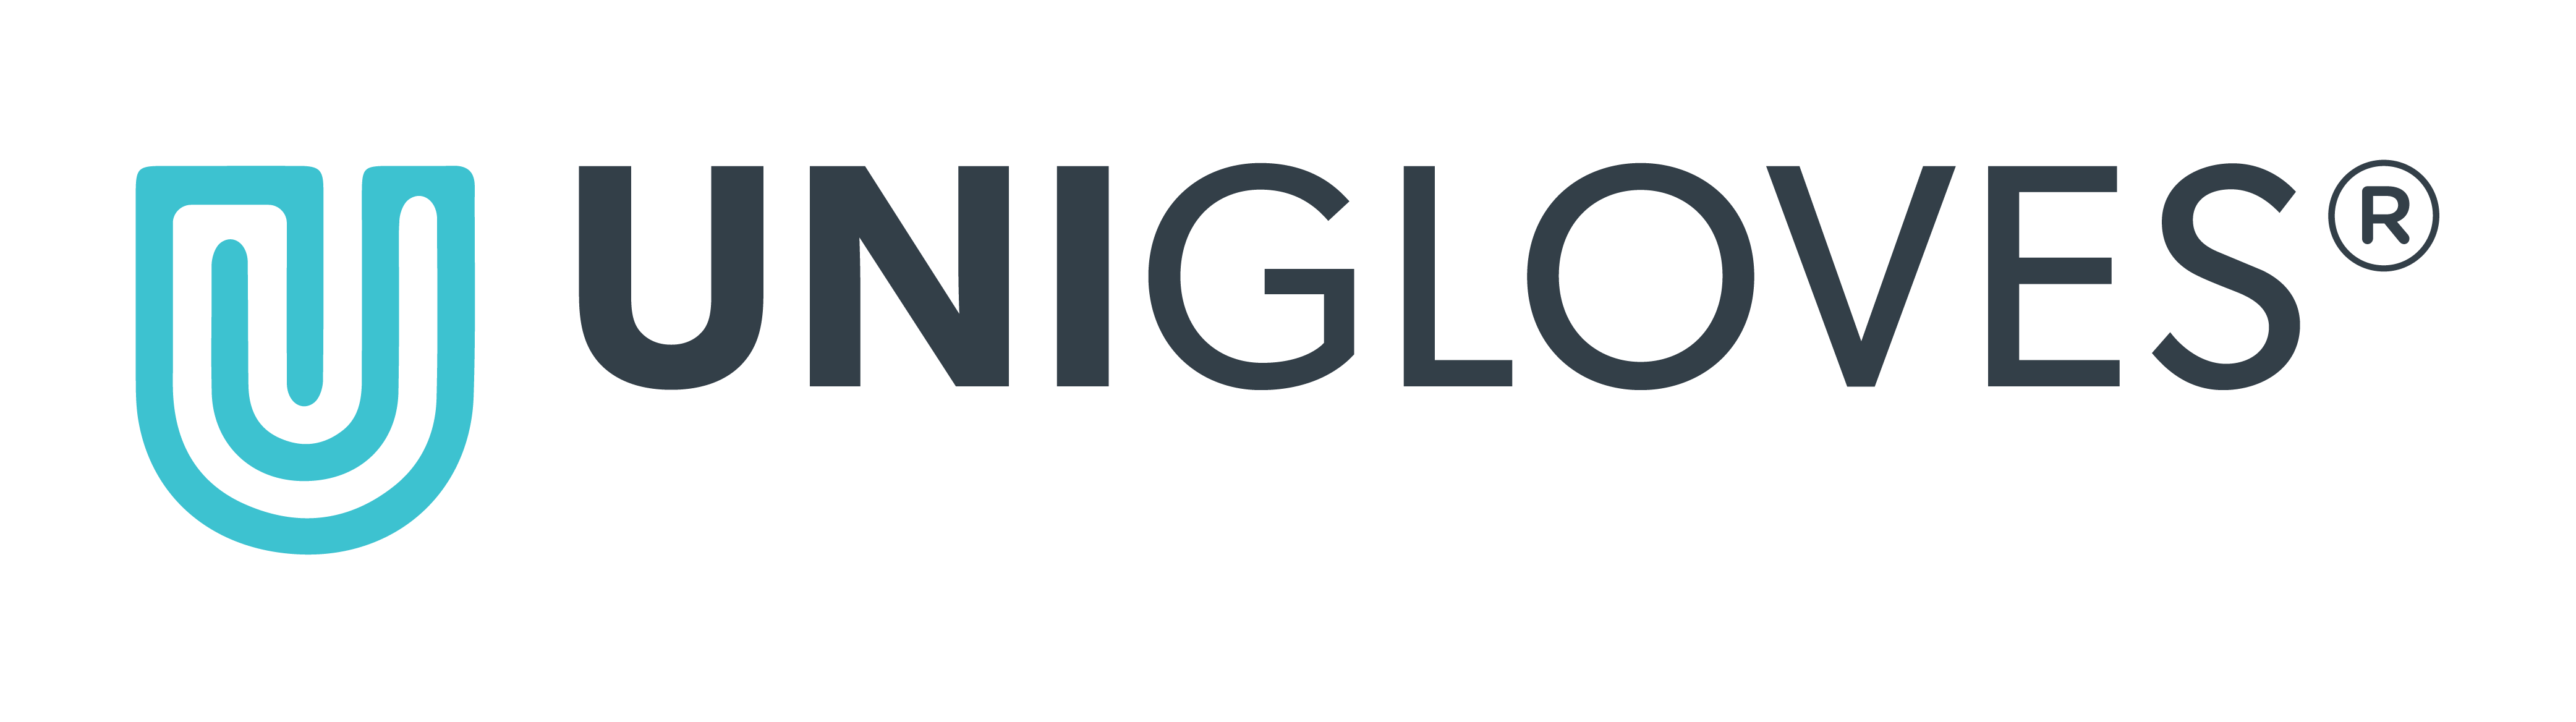 Unigloves_logo_horizontal_RGB_2